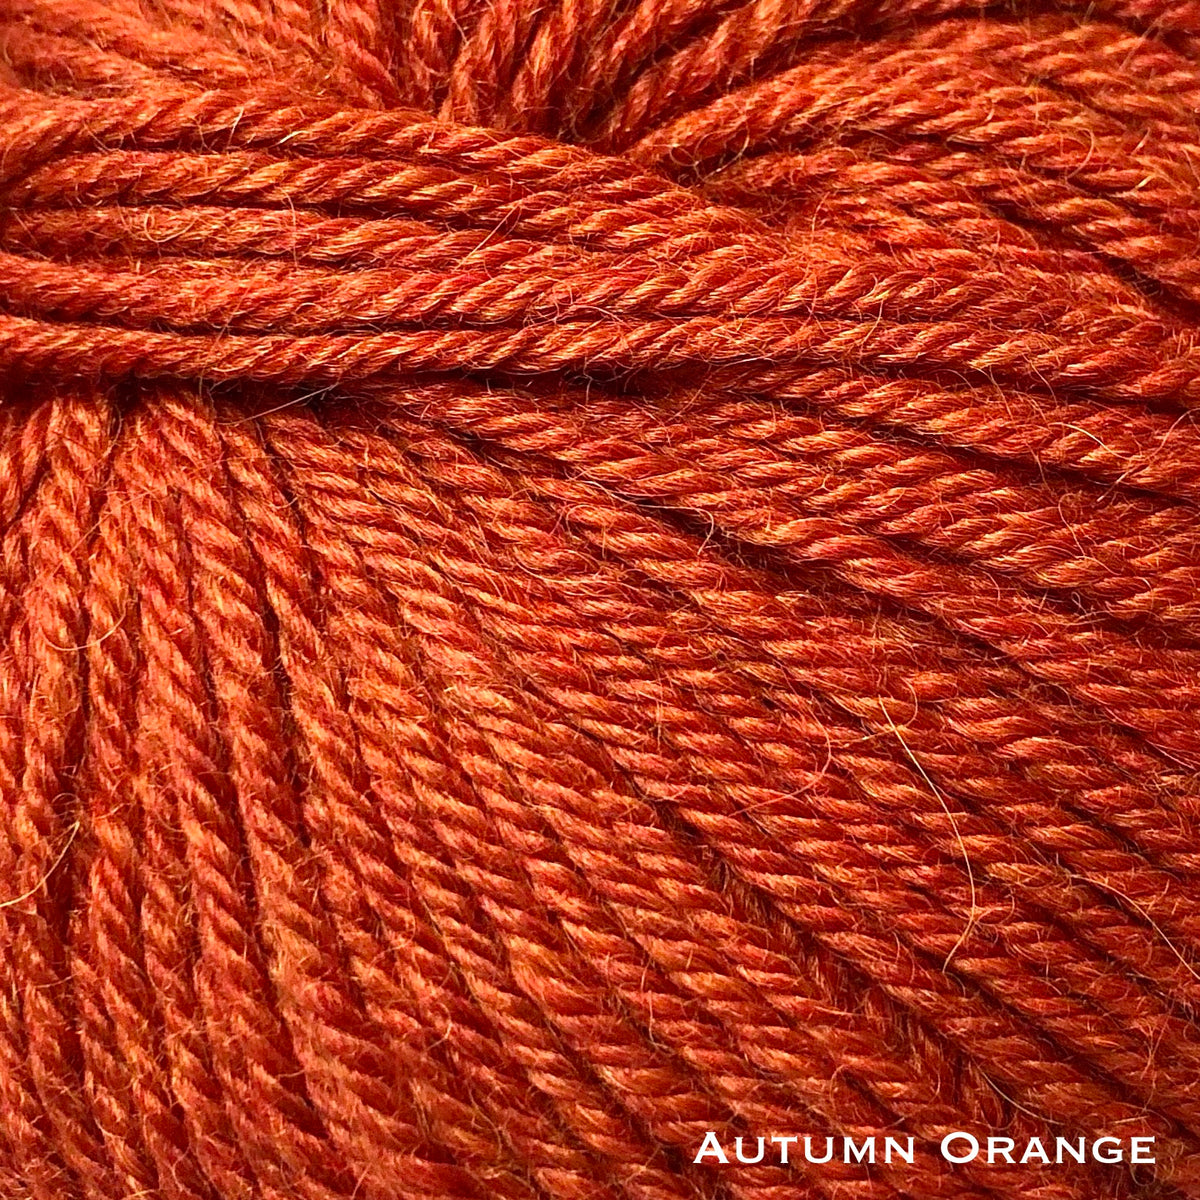 autumn burnt orange sport weight alpaca wool yarn for knitting and crochet